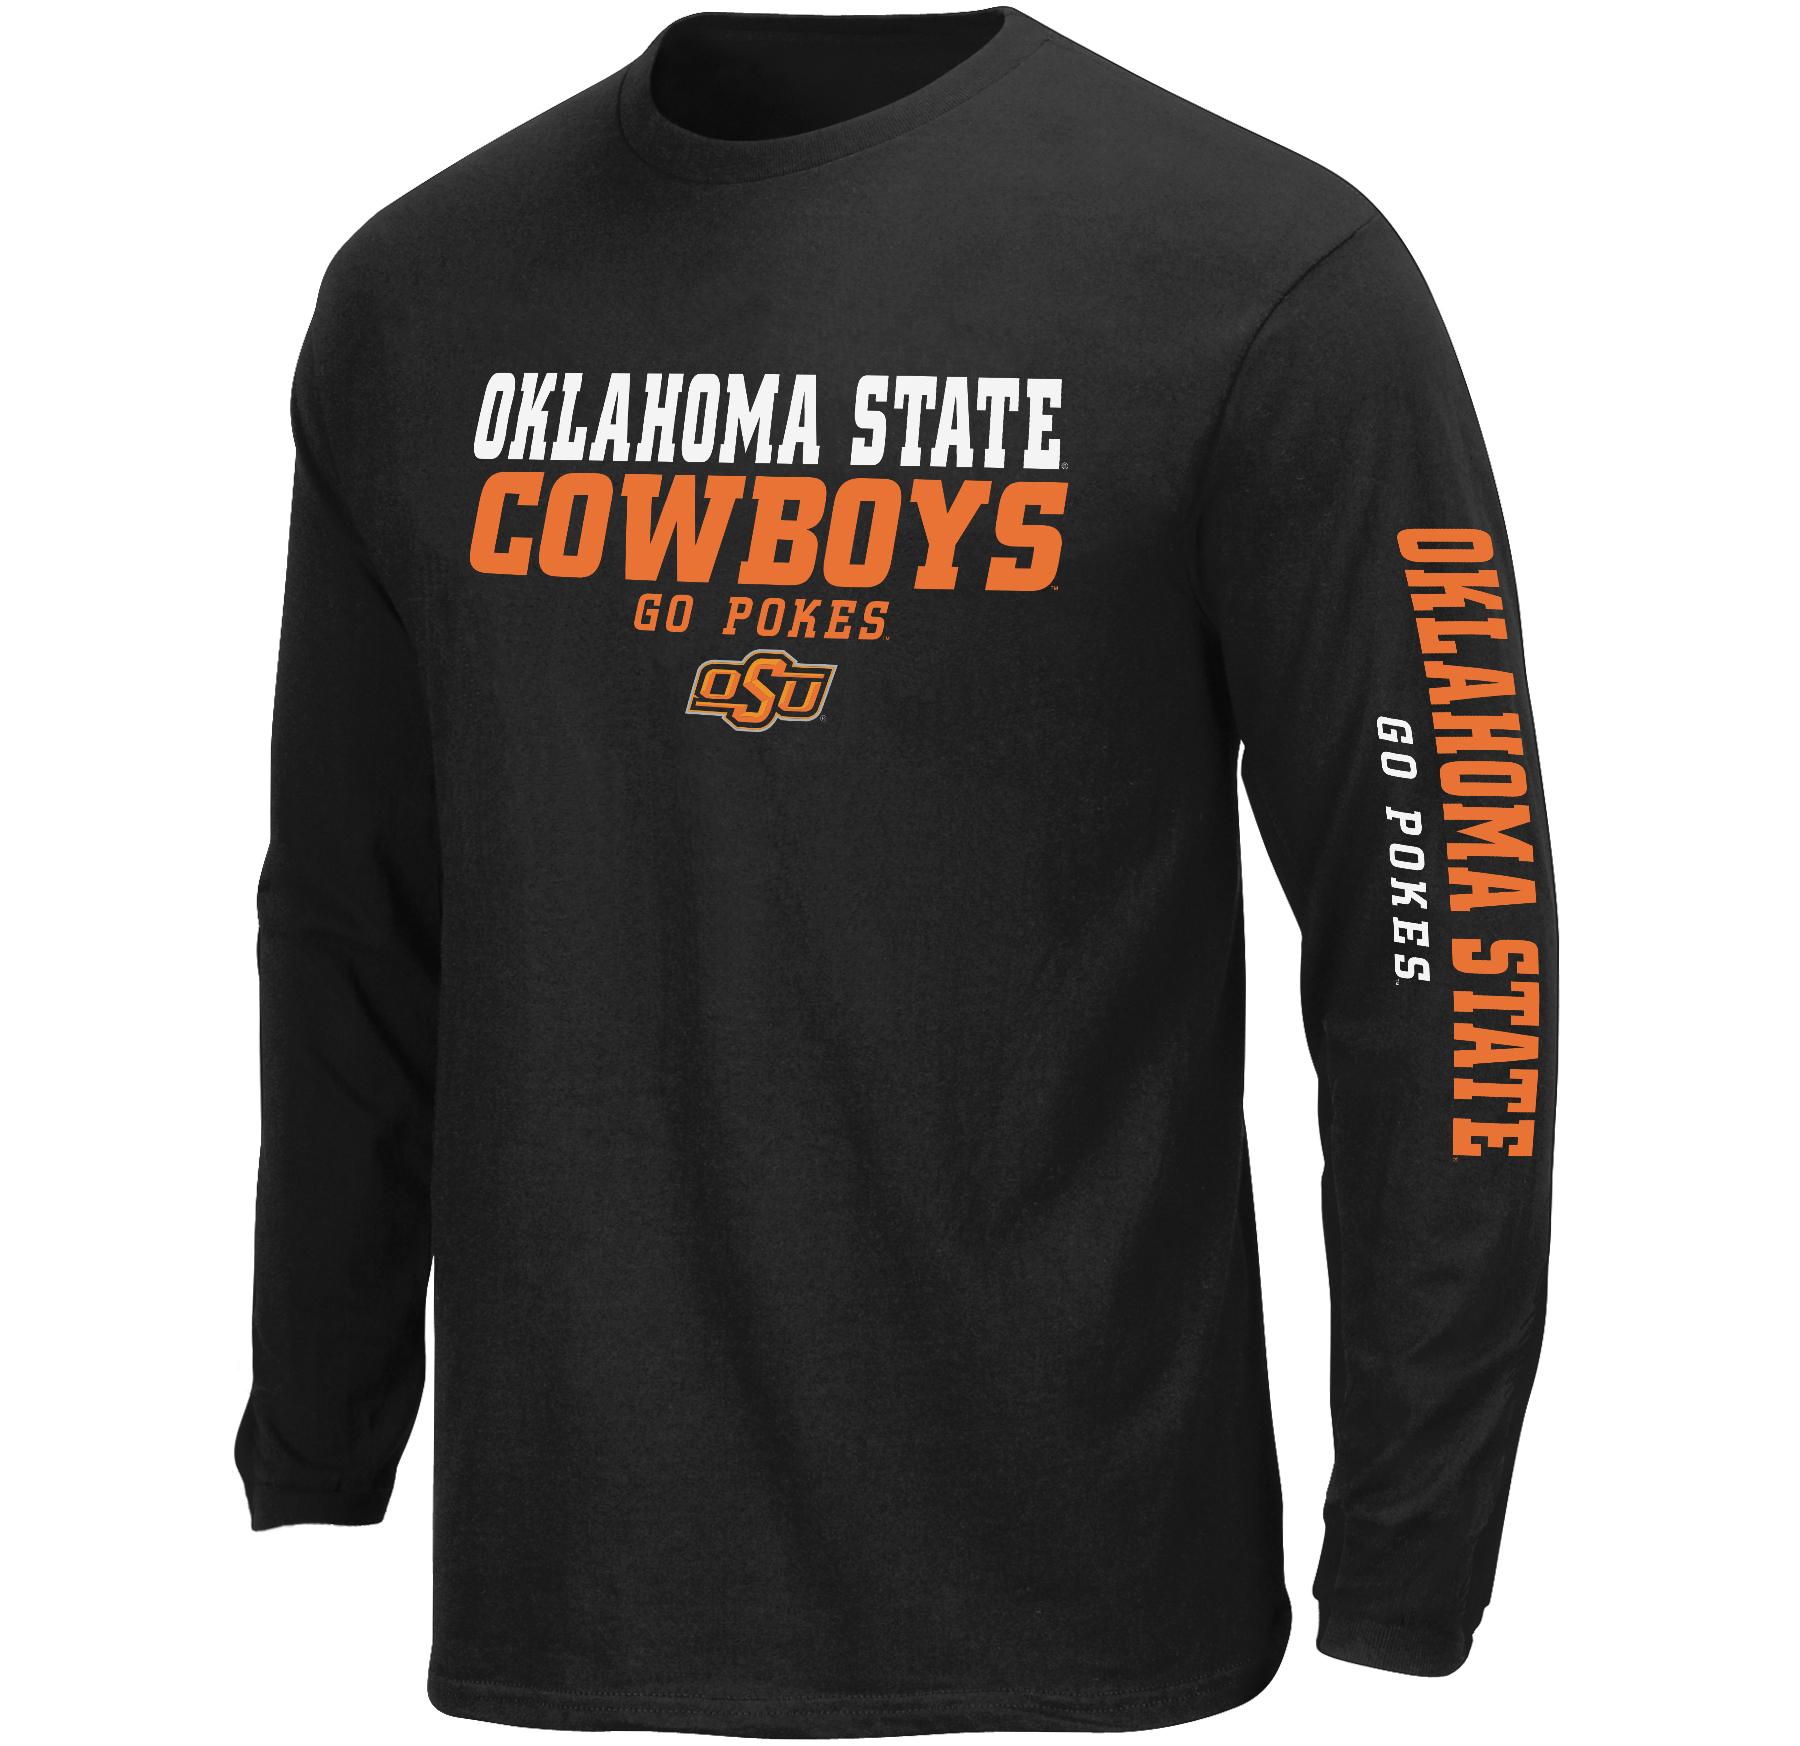 NCAA Men's Long-Sleeve T-Shirt - Oklahoma State Cowboys